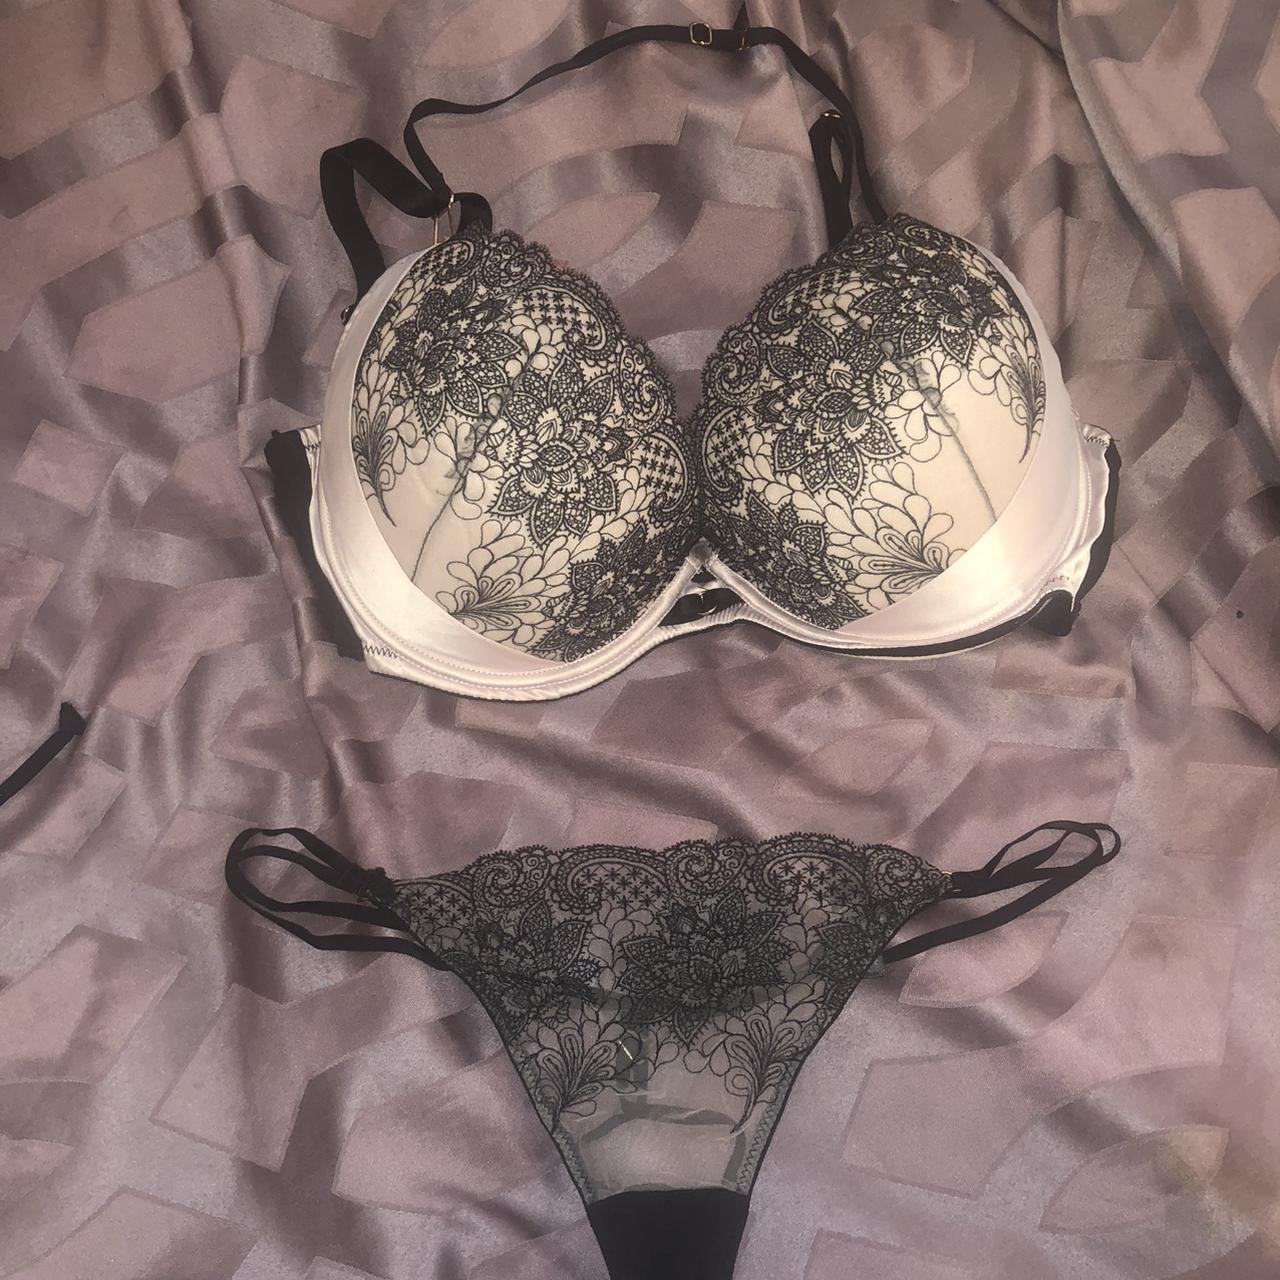 Ann summers lingerie set 38F bra and size 12 string - Depop